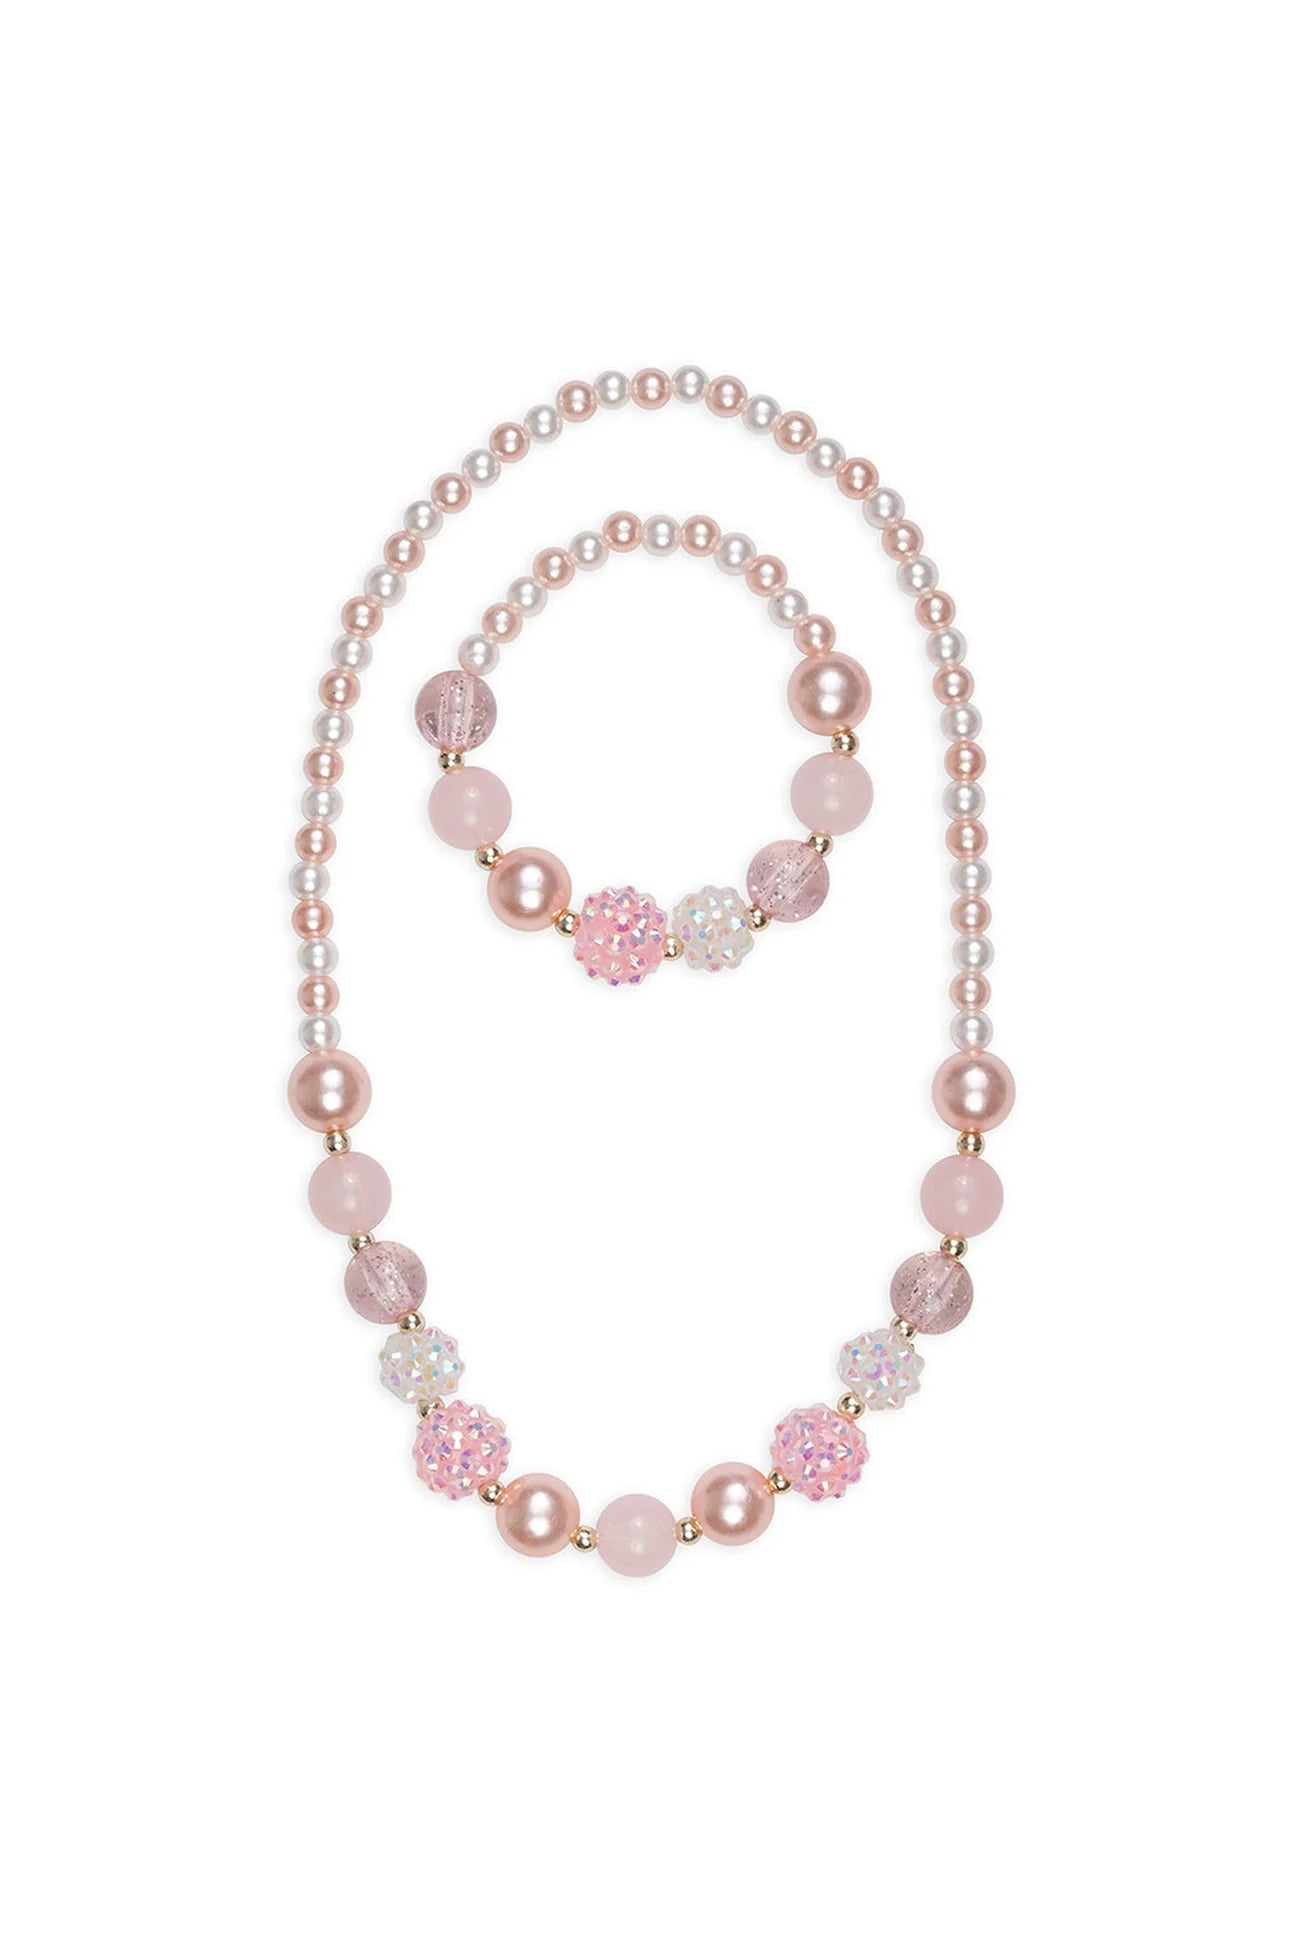 Pearly Pink Bracelet/Necklace